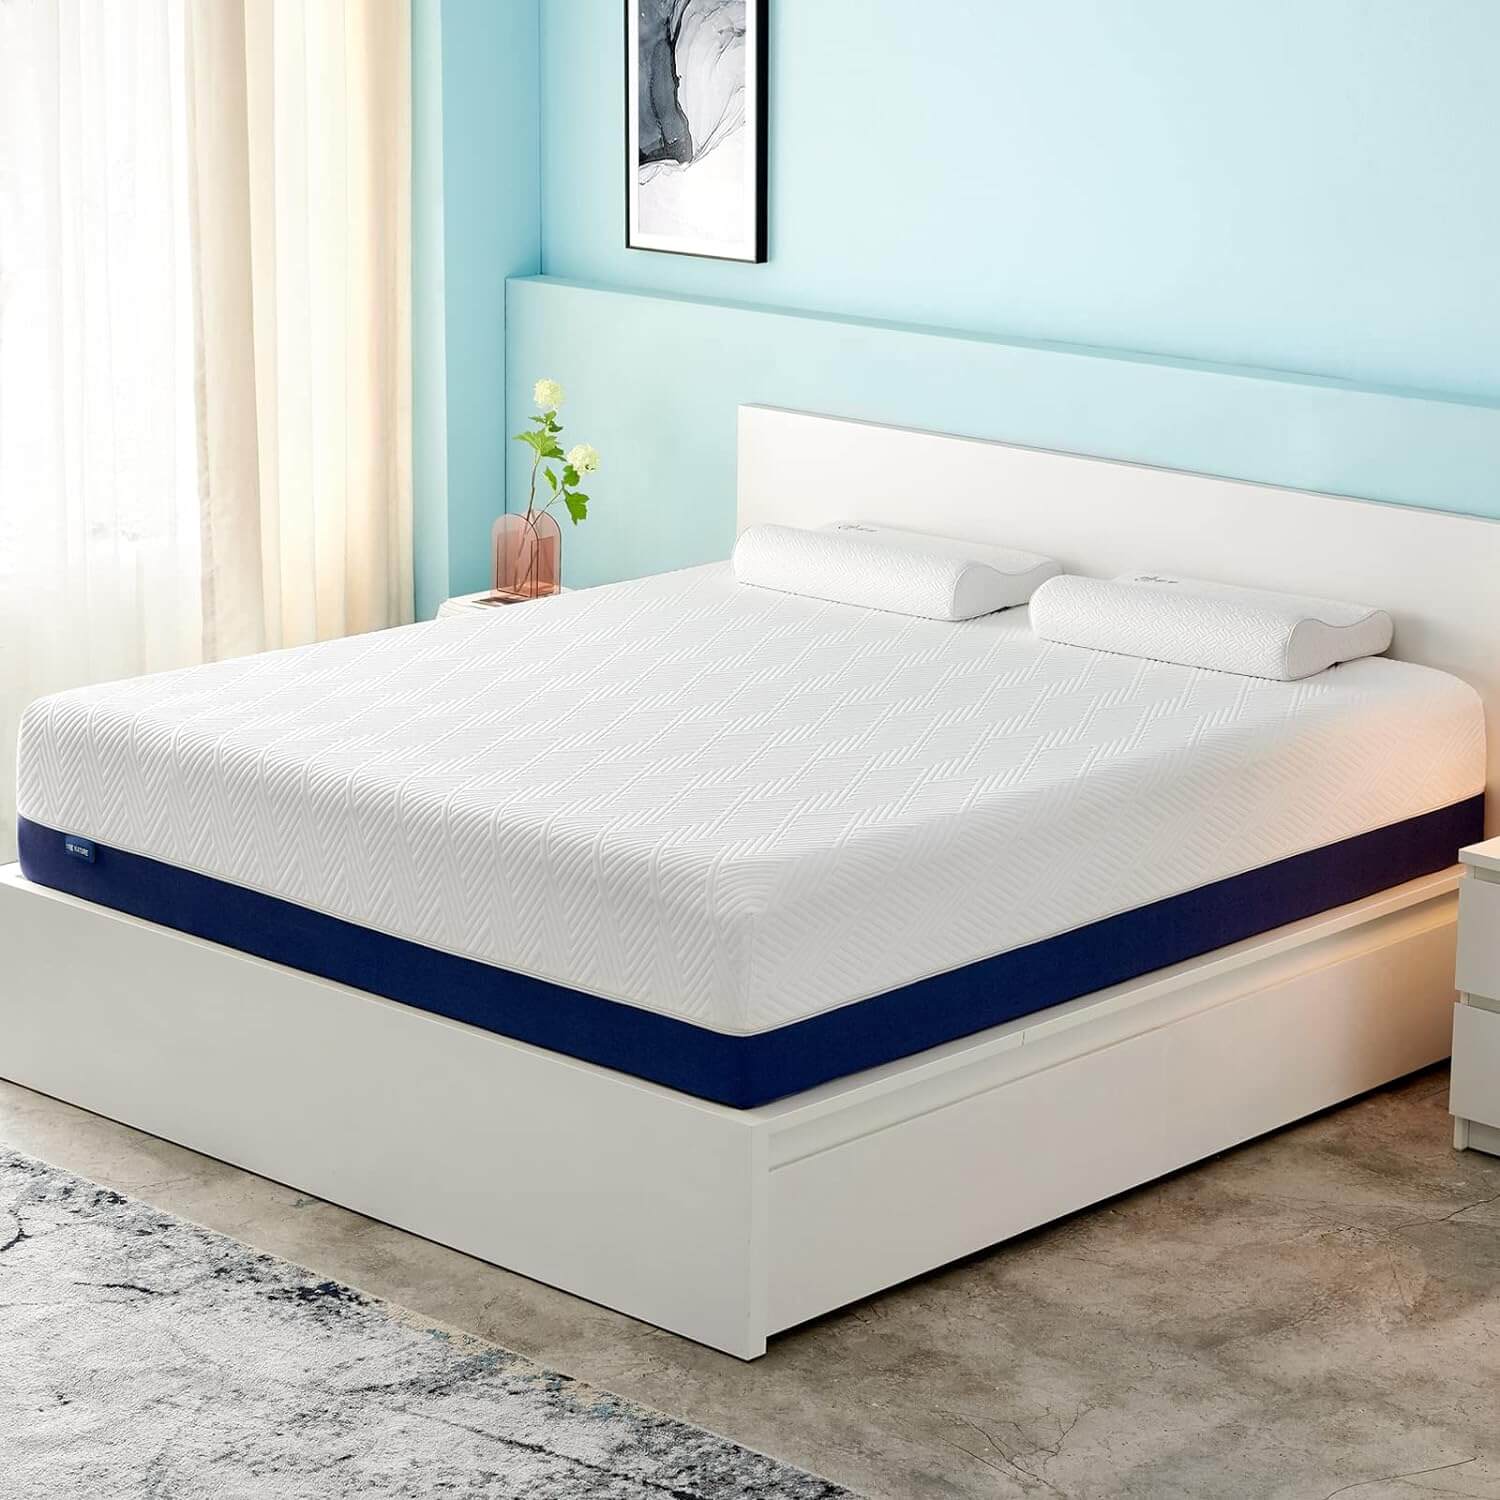 IYEE NATURE Cooling-Gel Memory Foam Breathable Bed Mattress